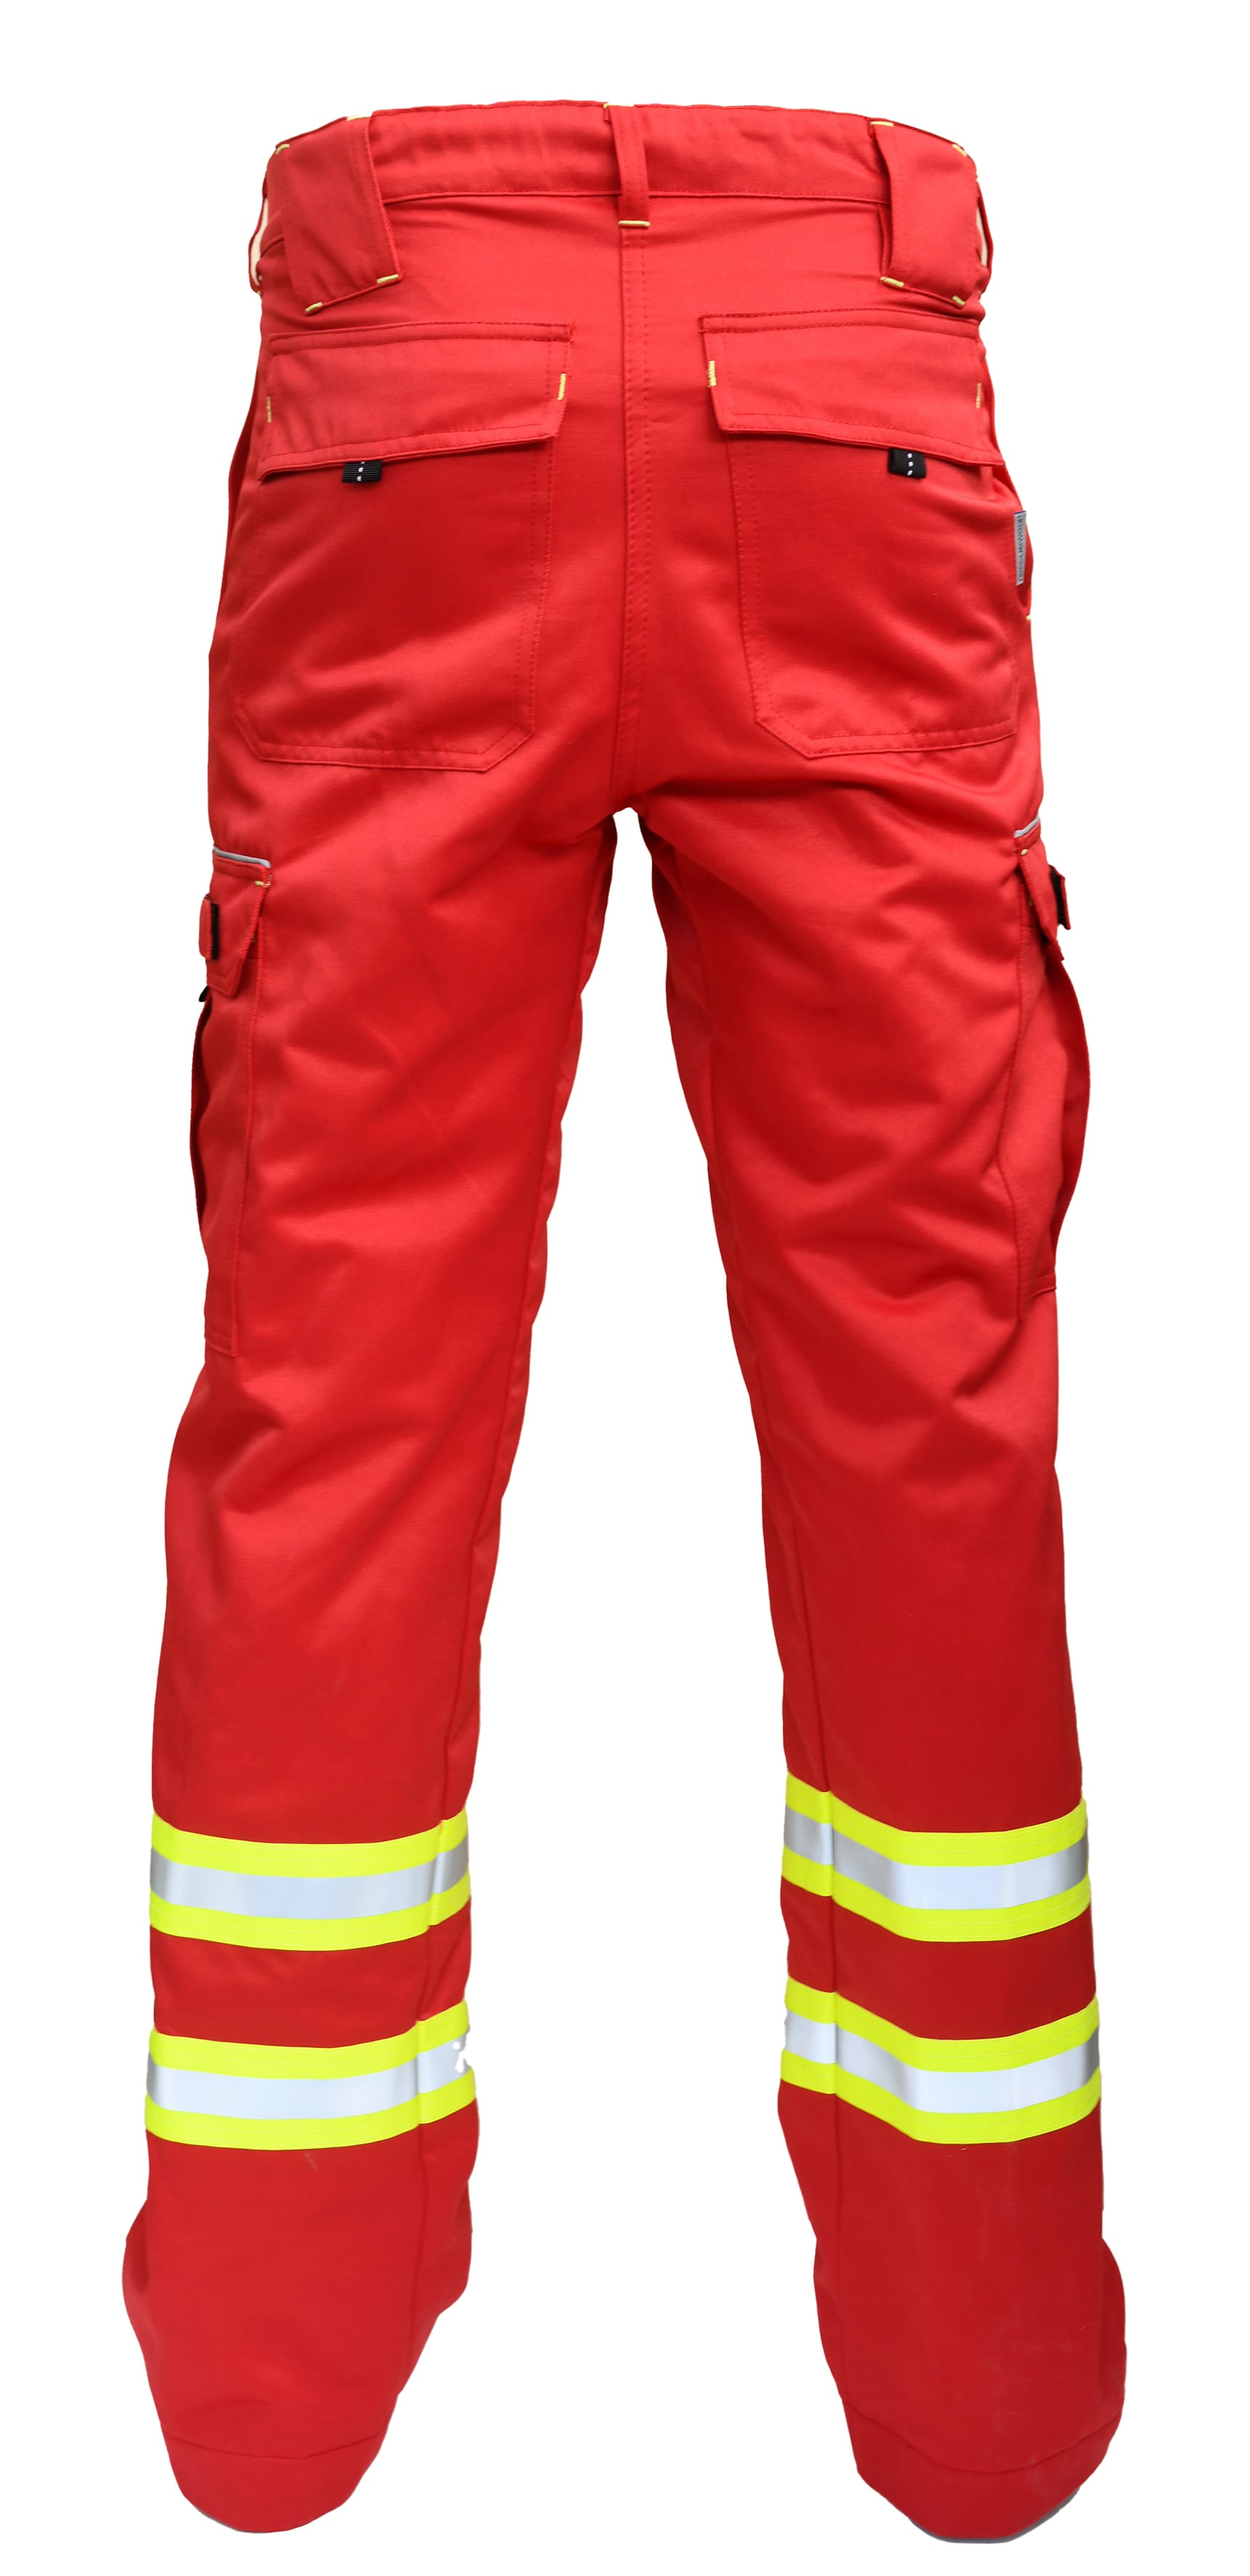 Rescuewear Unisex Hose Wasserrettung Rot - 50